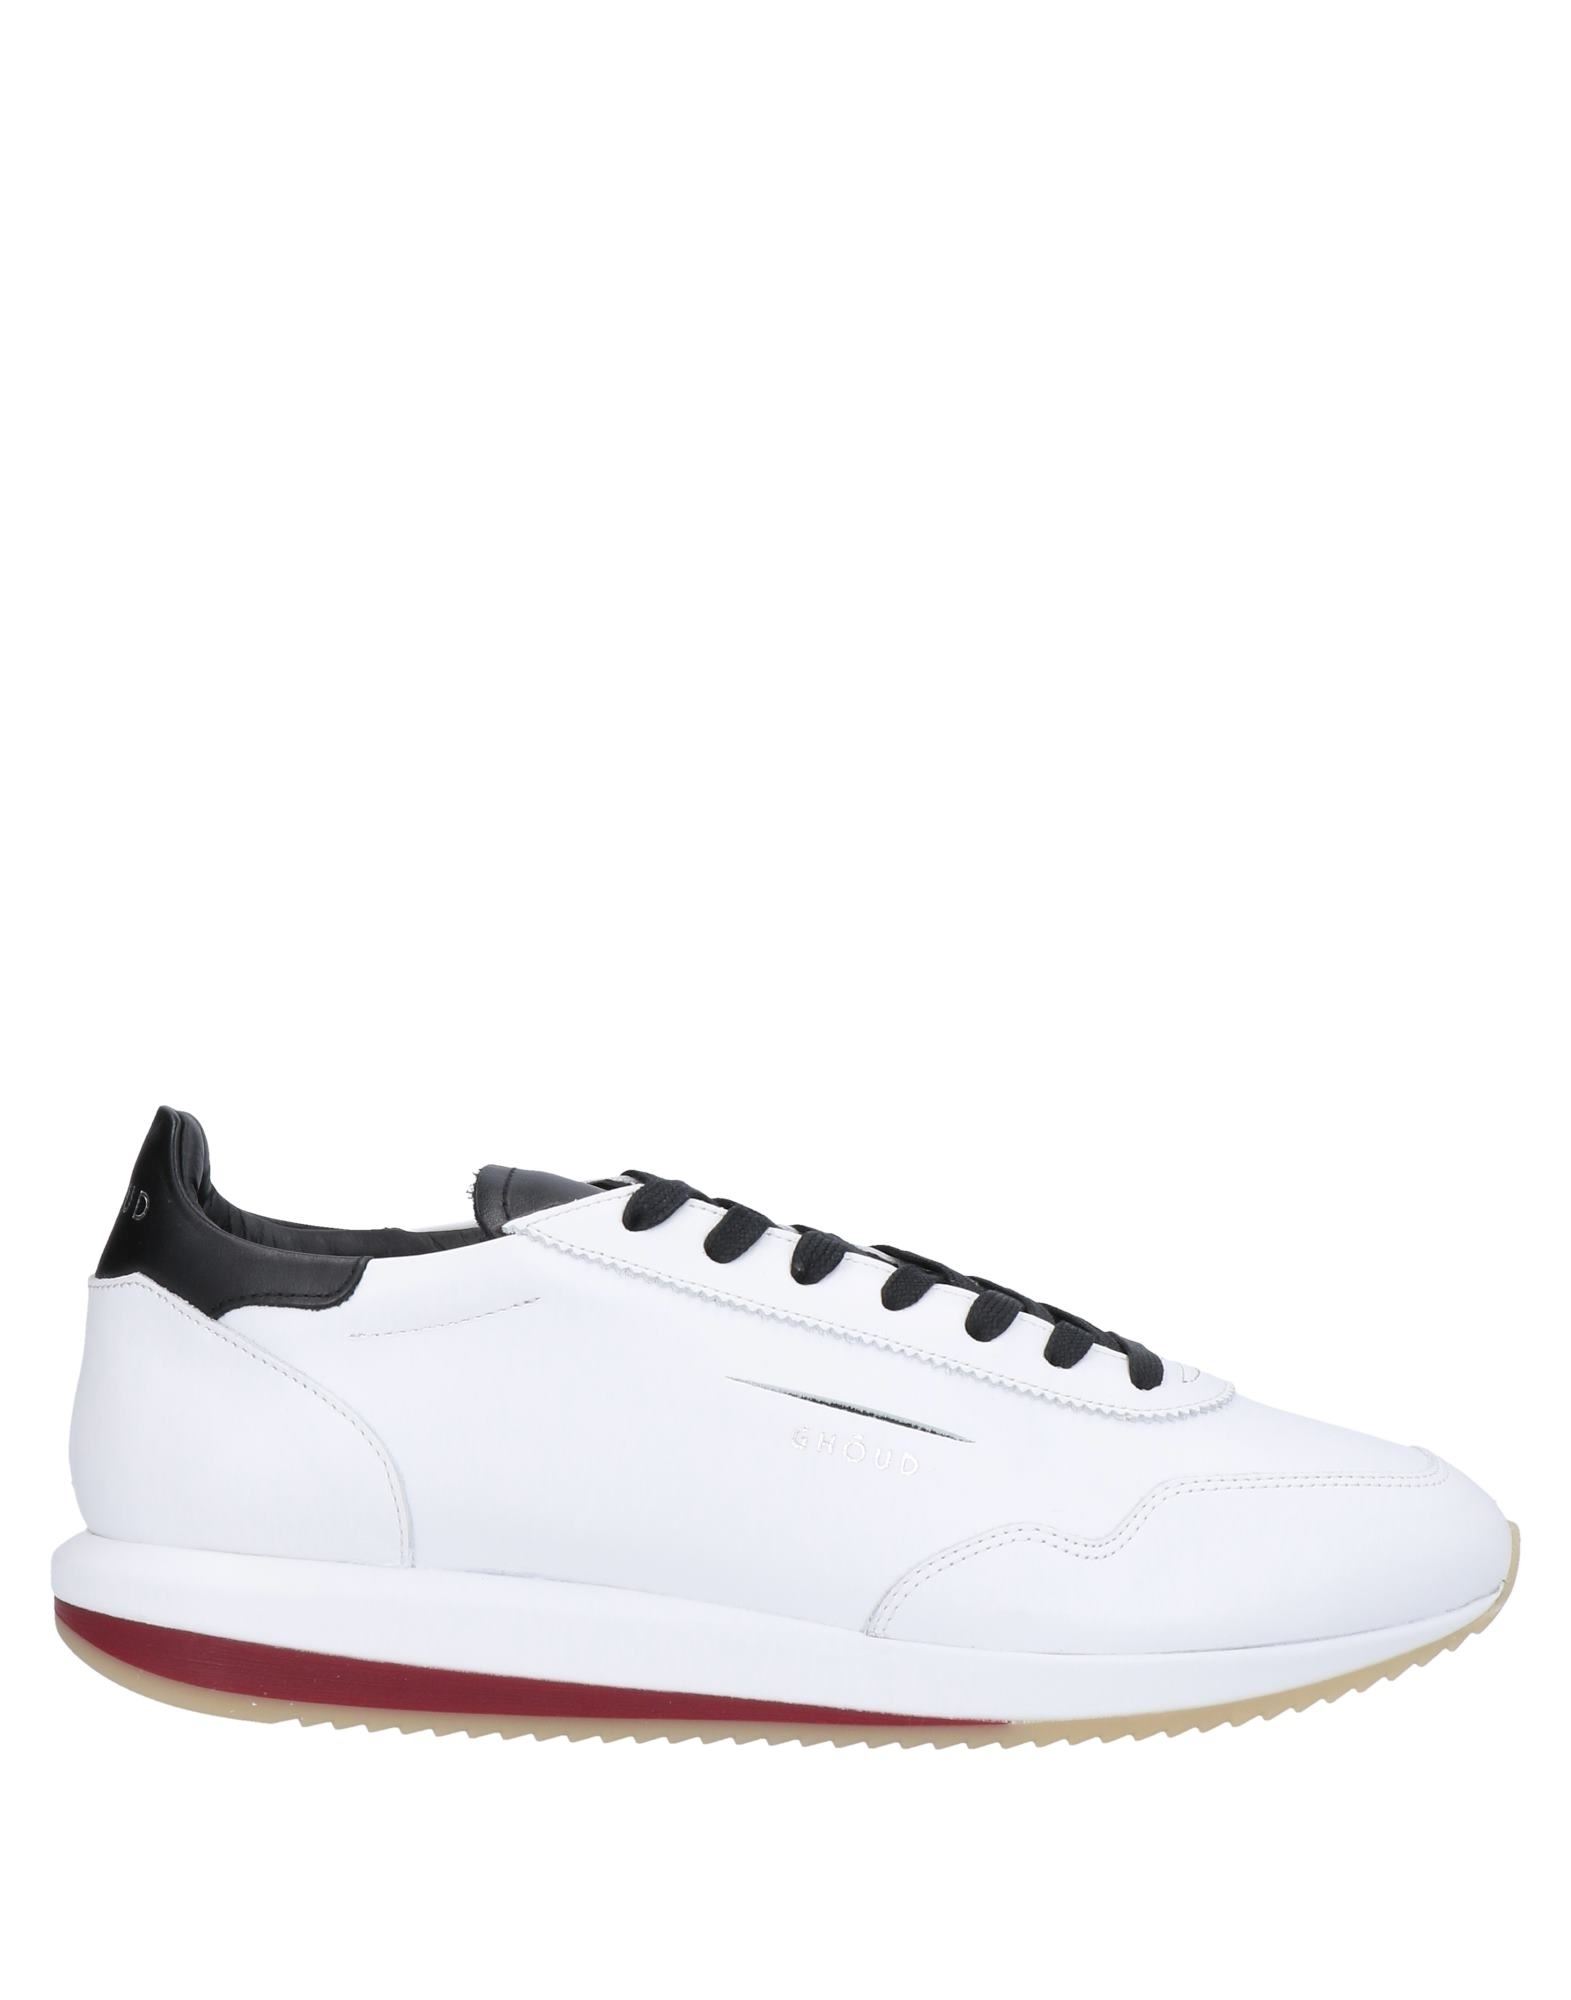 Ghoud Venice Sneakers In White